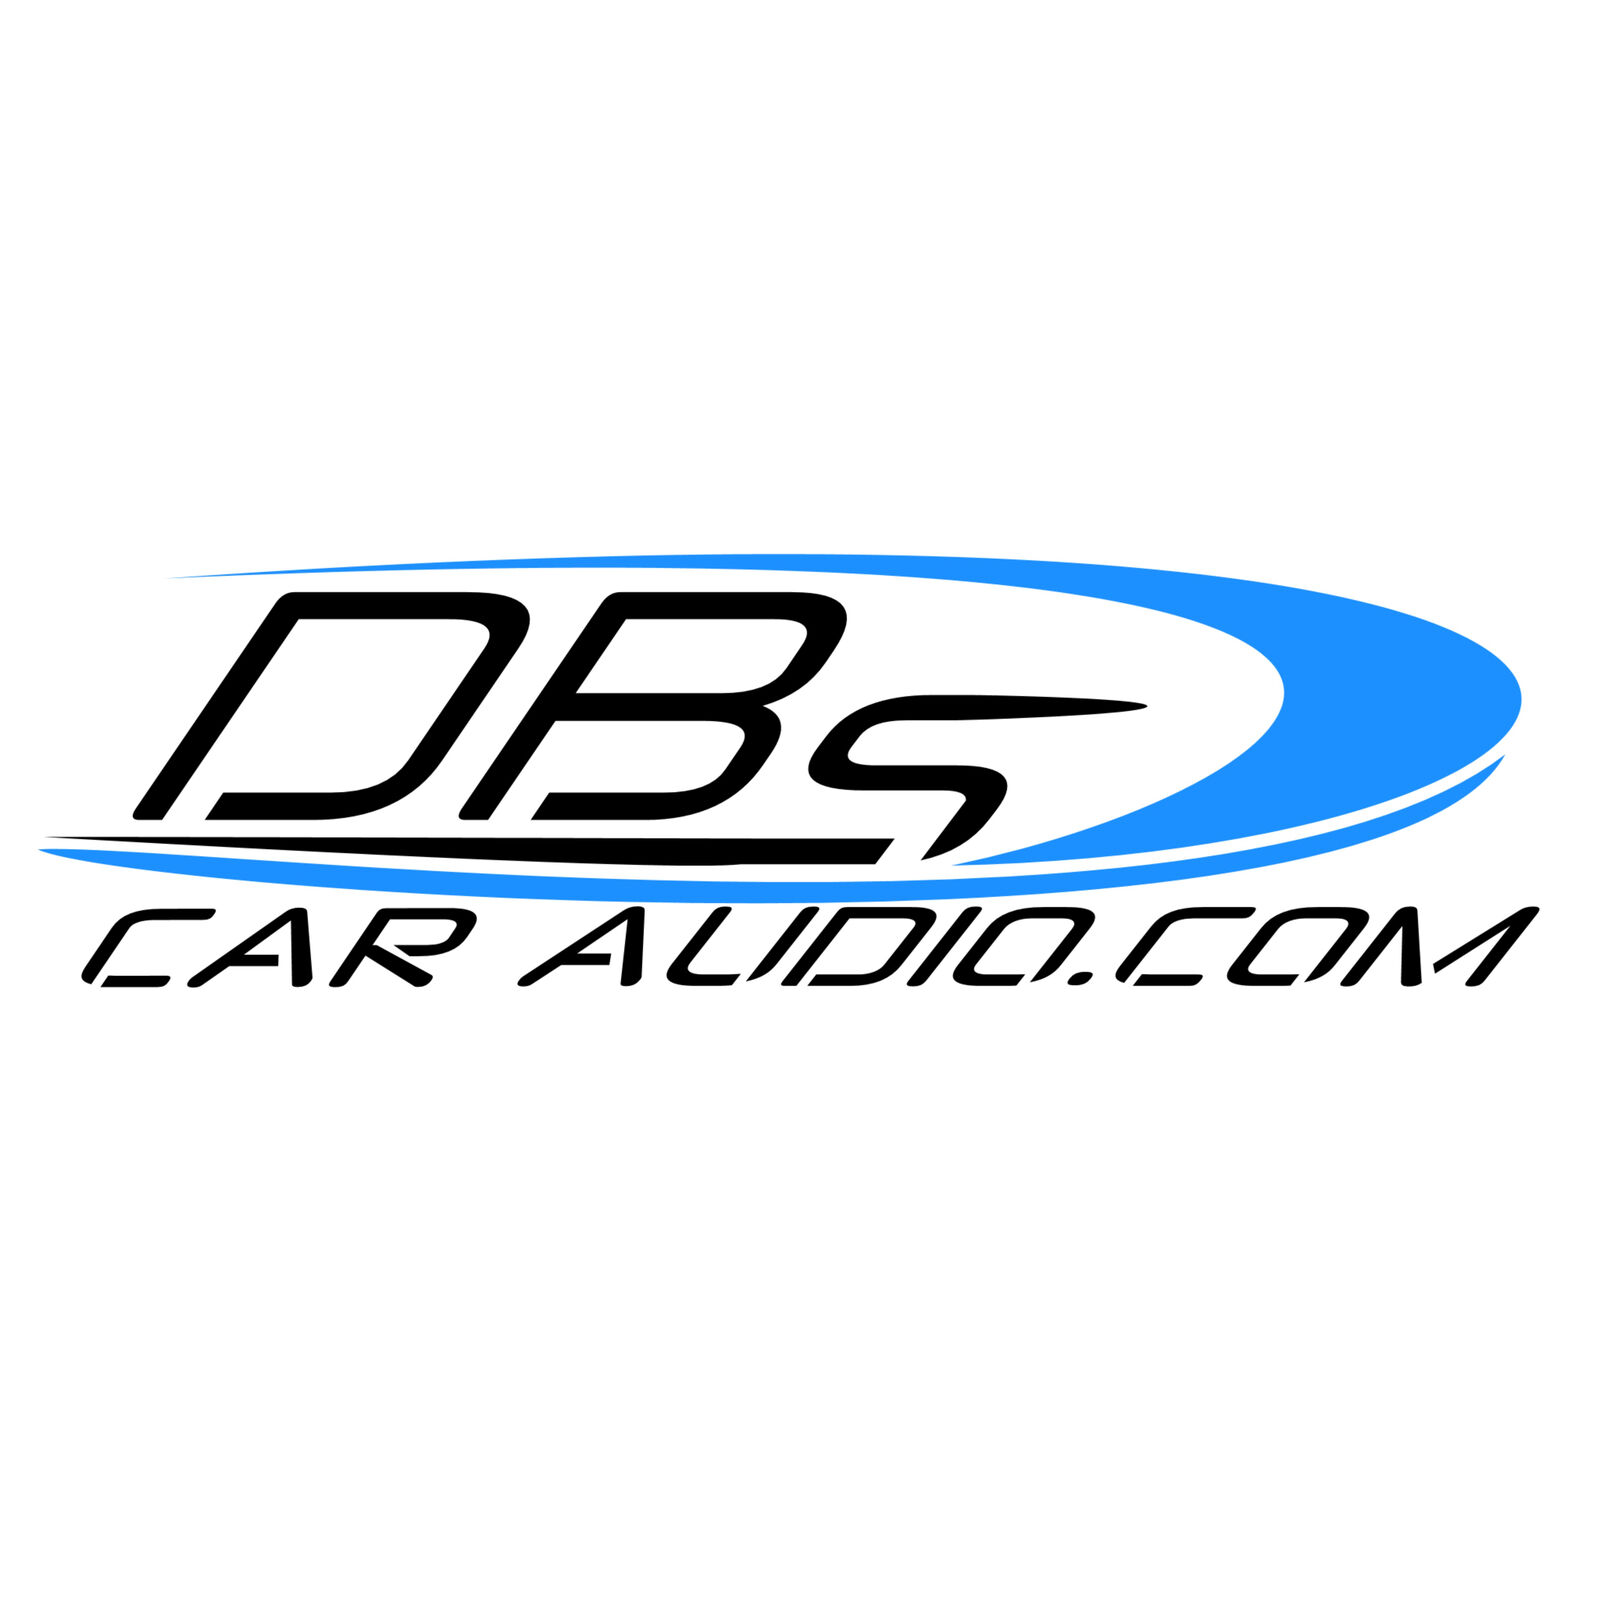 dbs-car-audio-affiliate-program-join-in-just-3-simple-steps